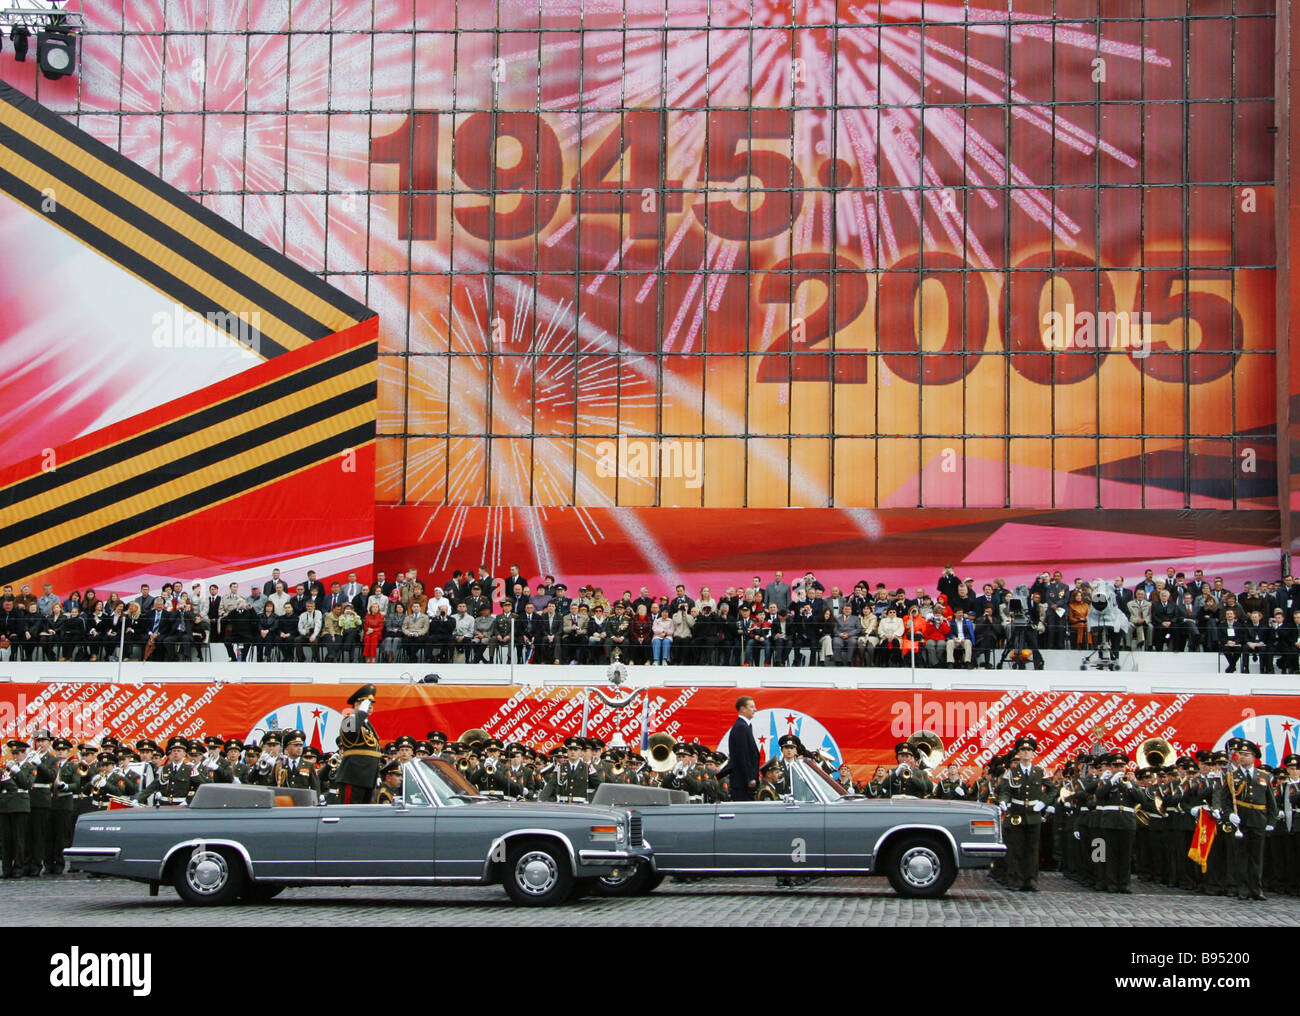 9 мая 2005. Парад Победы 2005. Парад 2005 года на красной площади. Парад Победы 2005 года. Парад Победы в 2005 году в Москве.